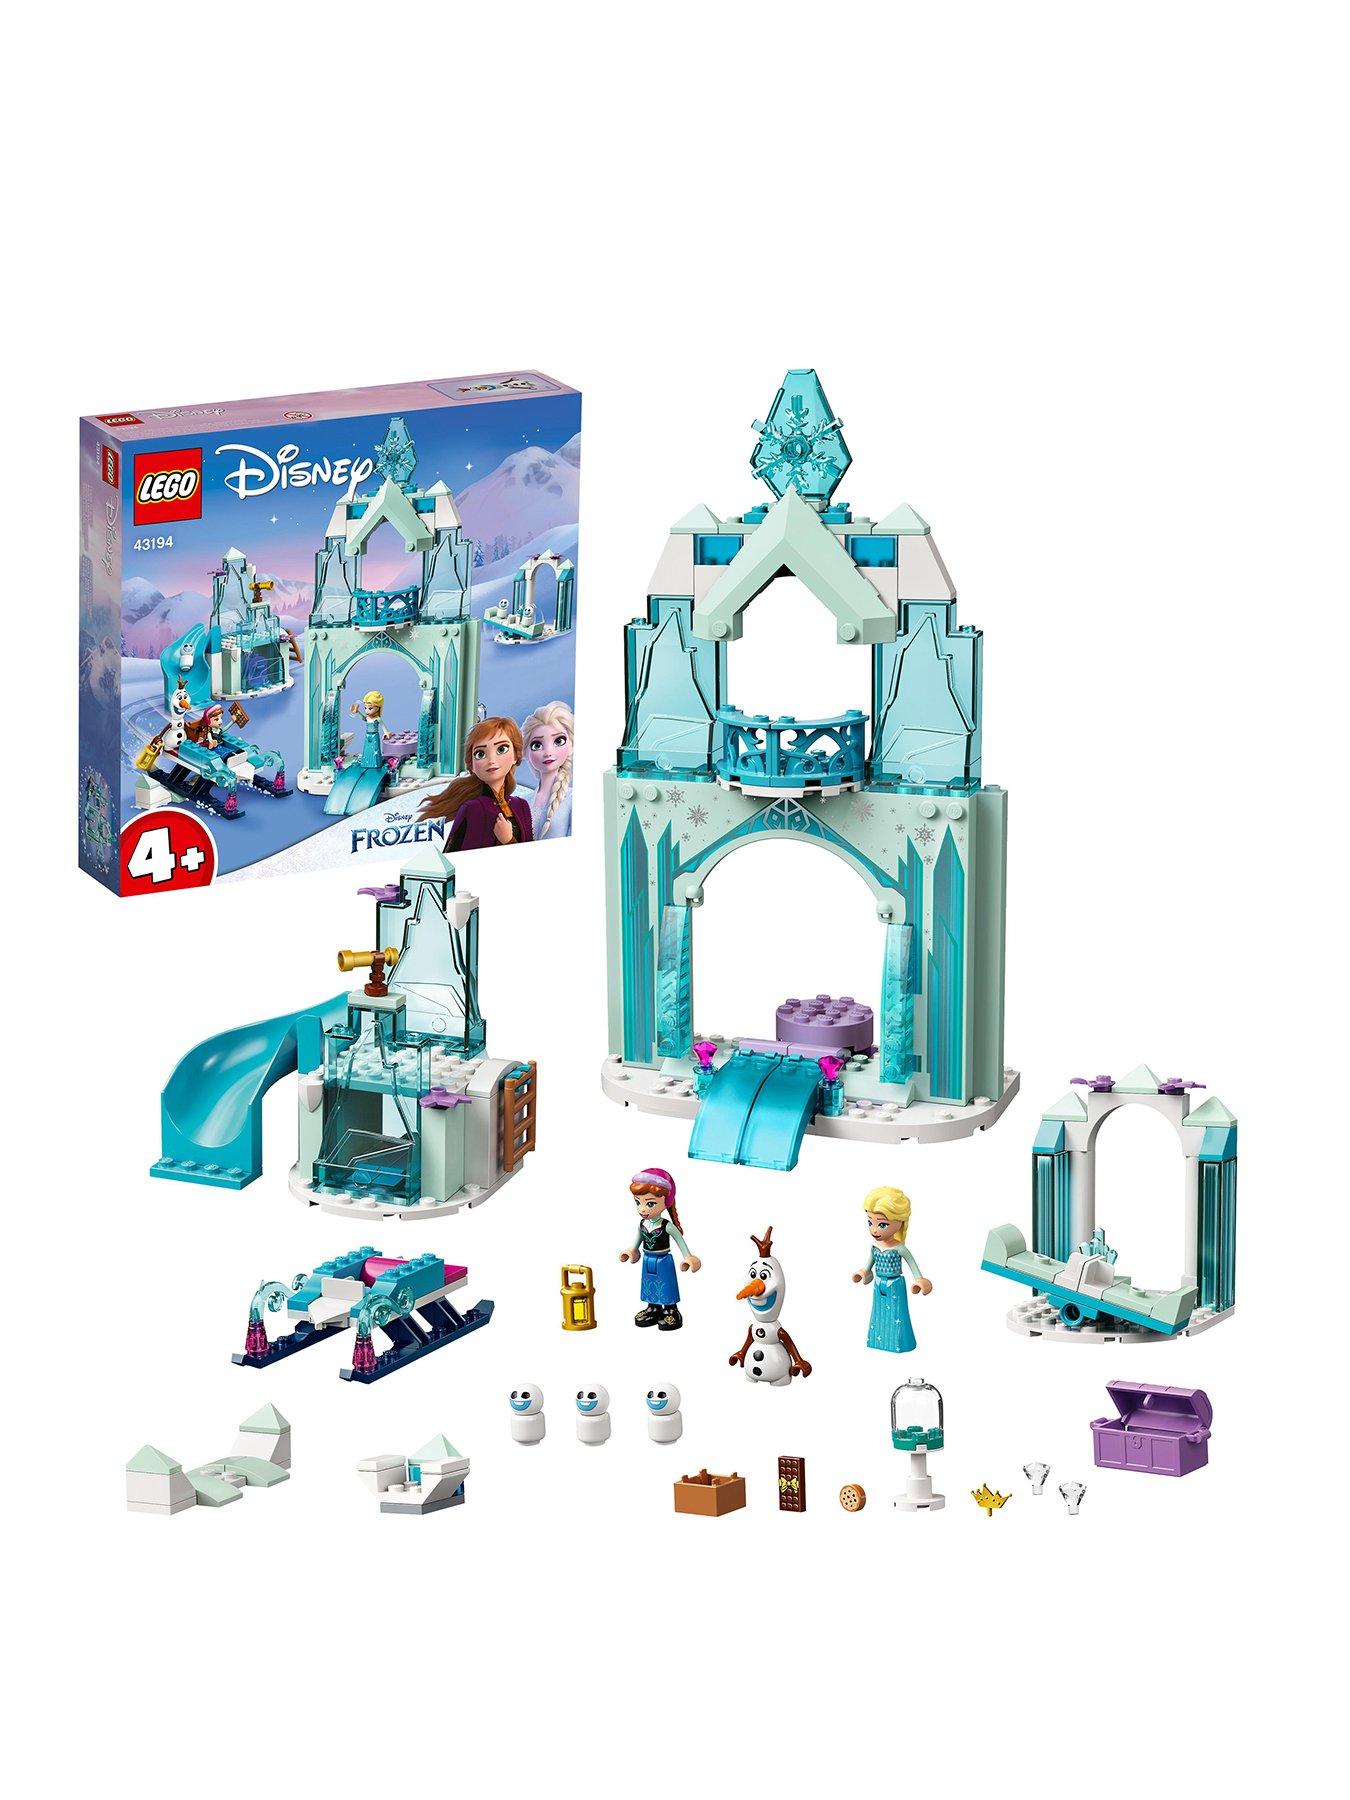 "Anna" Girl Female Minifigure Mini-doll Details about   LEGO Disney Princess Frozen Theme 